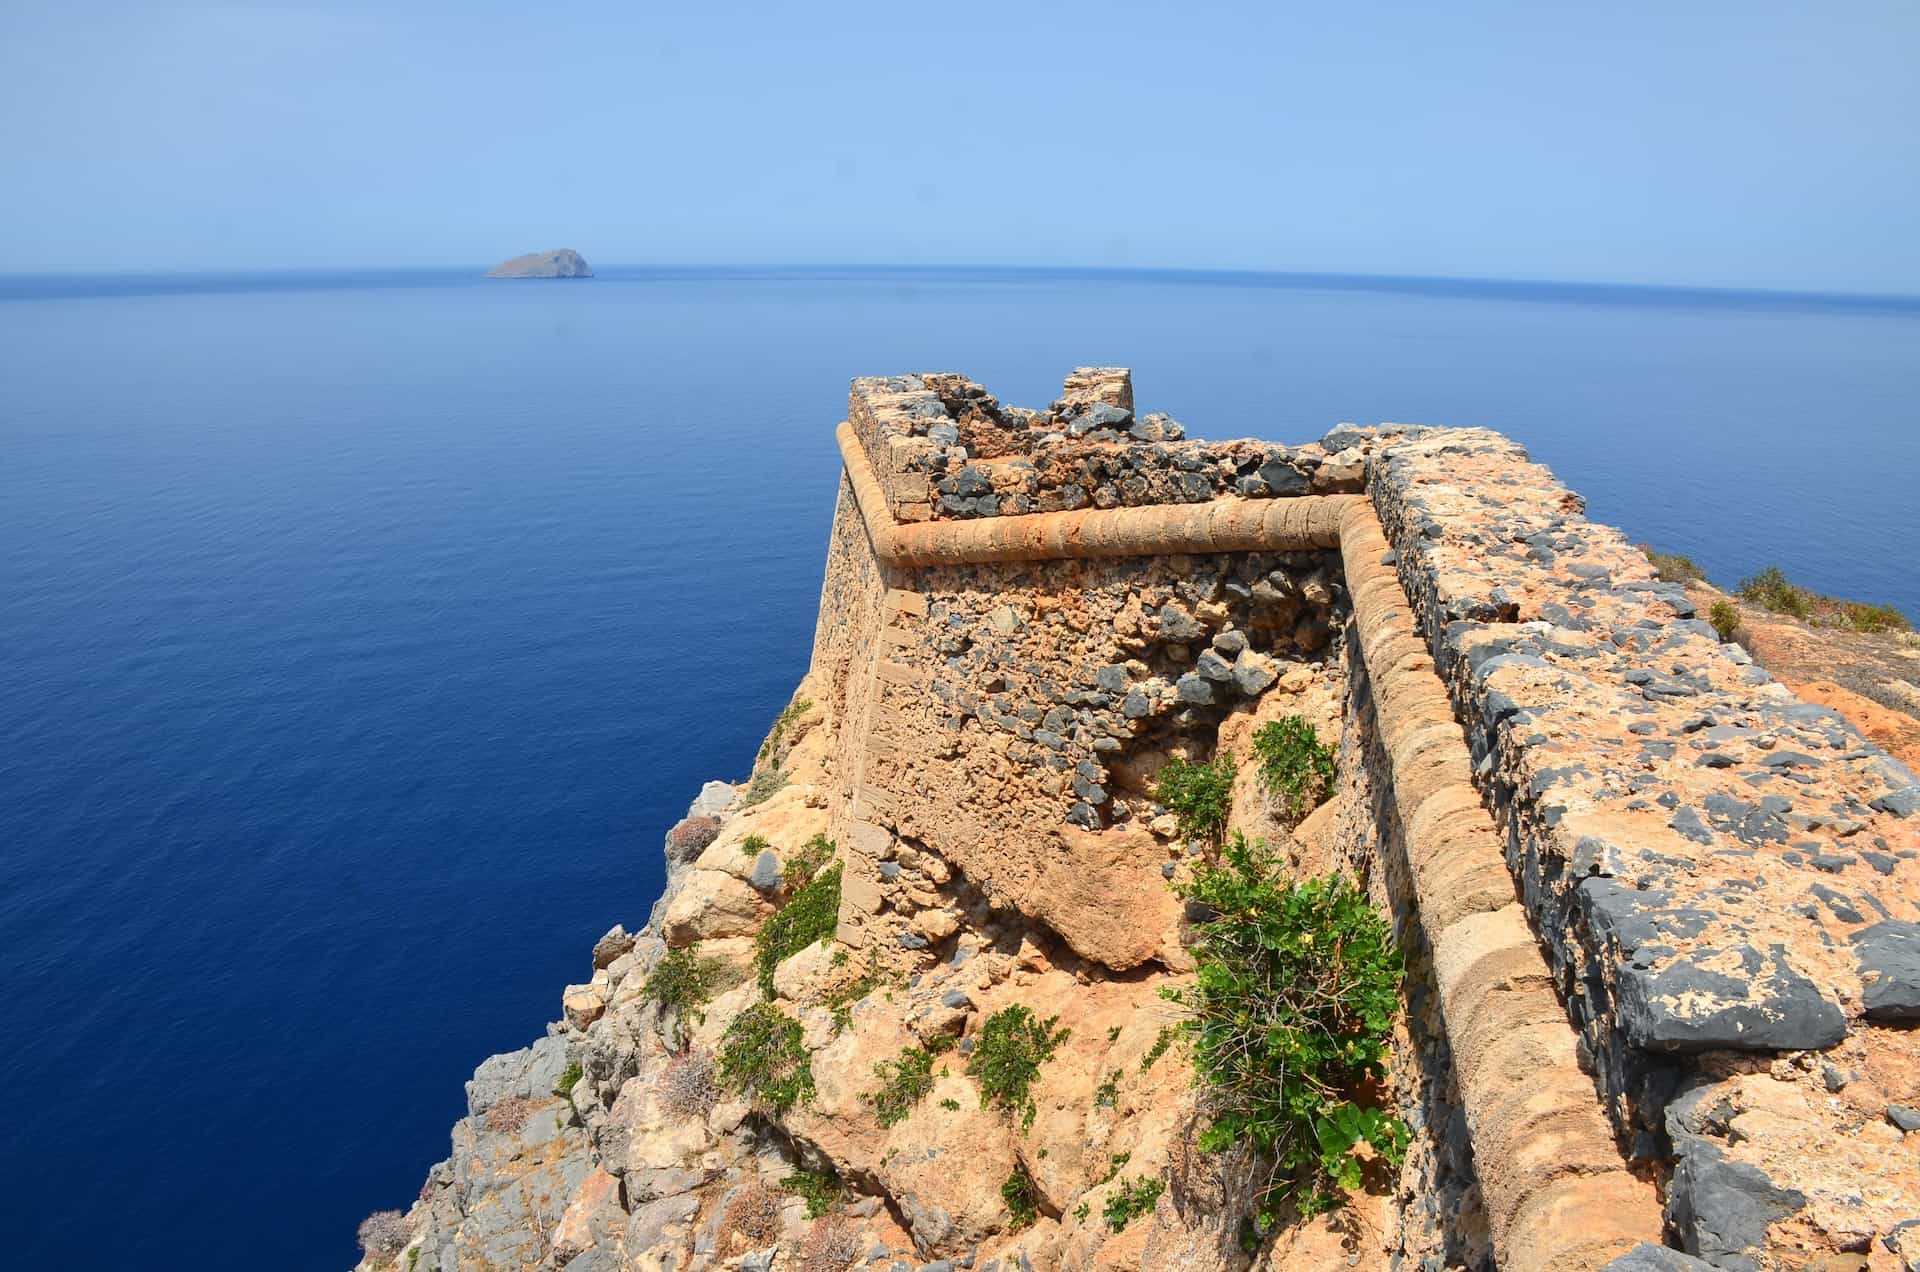 Southwest corner of the Venetian fortress on Gramvousa, Crete